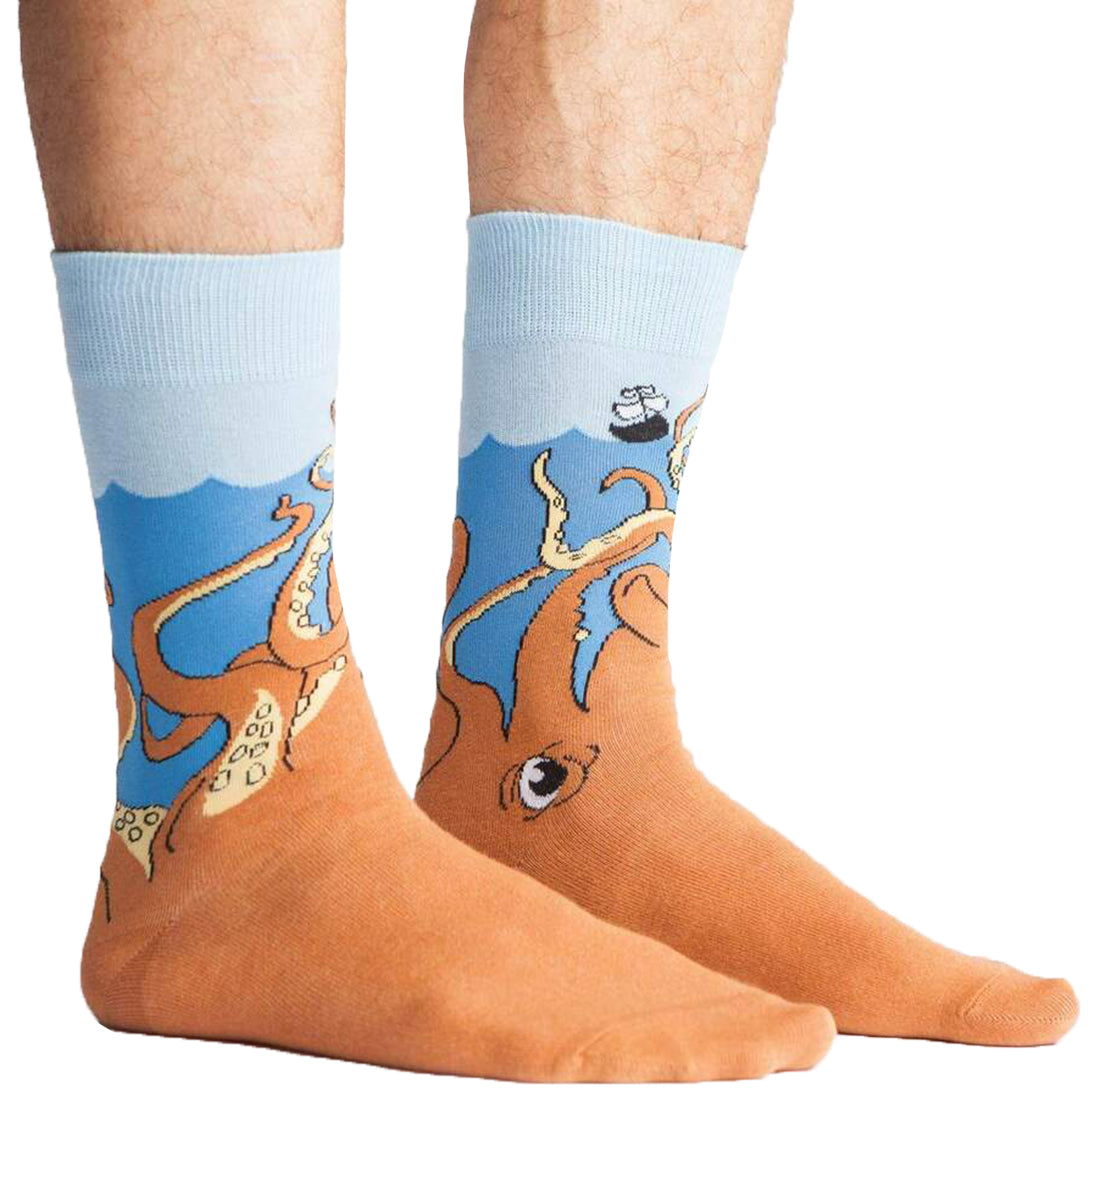 SOCK it to me Men's Crew Socks (mef0059),Squid-o - Squid-o,One Size